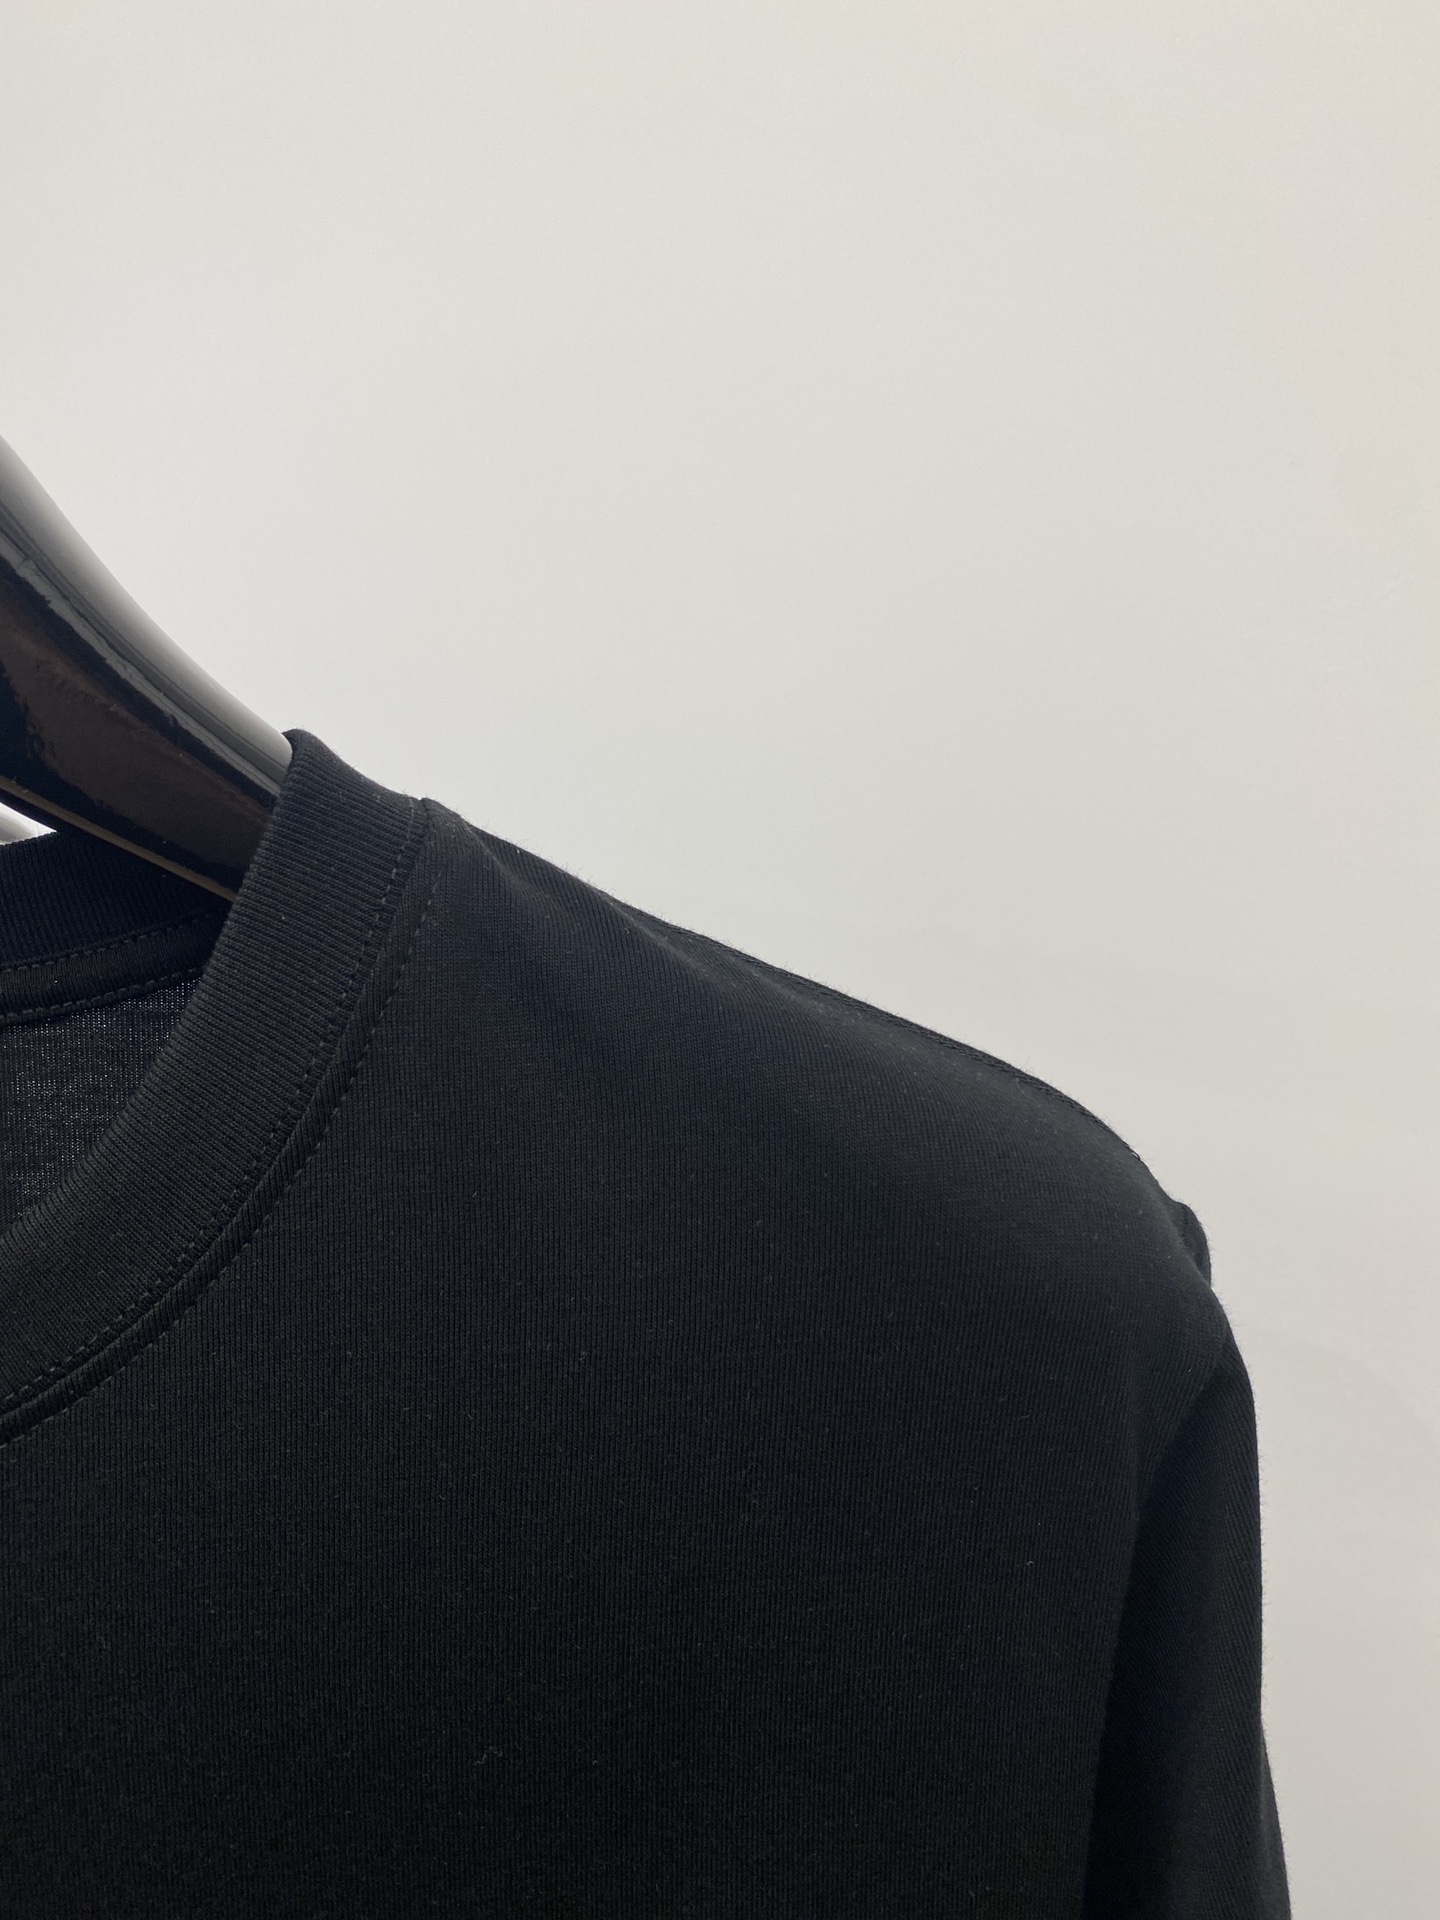 fendi t シャツ アウトレットＮ級品 トップス 半袖 純綿 ファッション 人気定番 ロゴプリント 新品 柔らかい ブラック_3